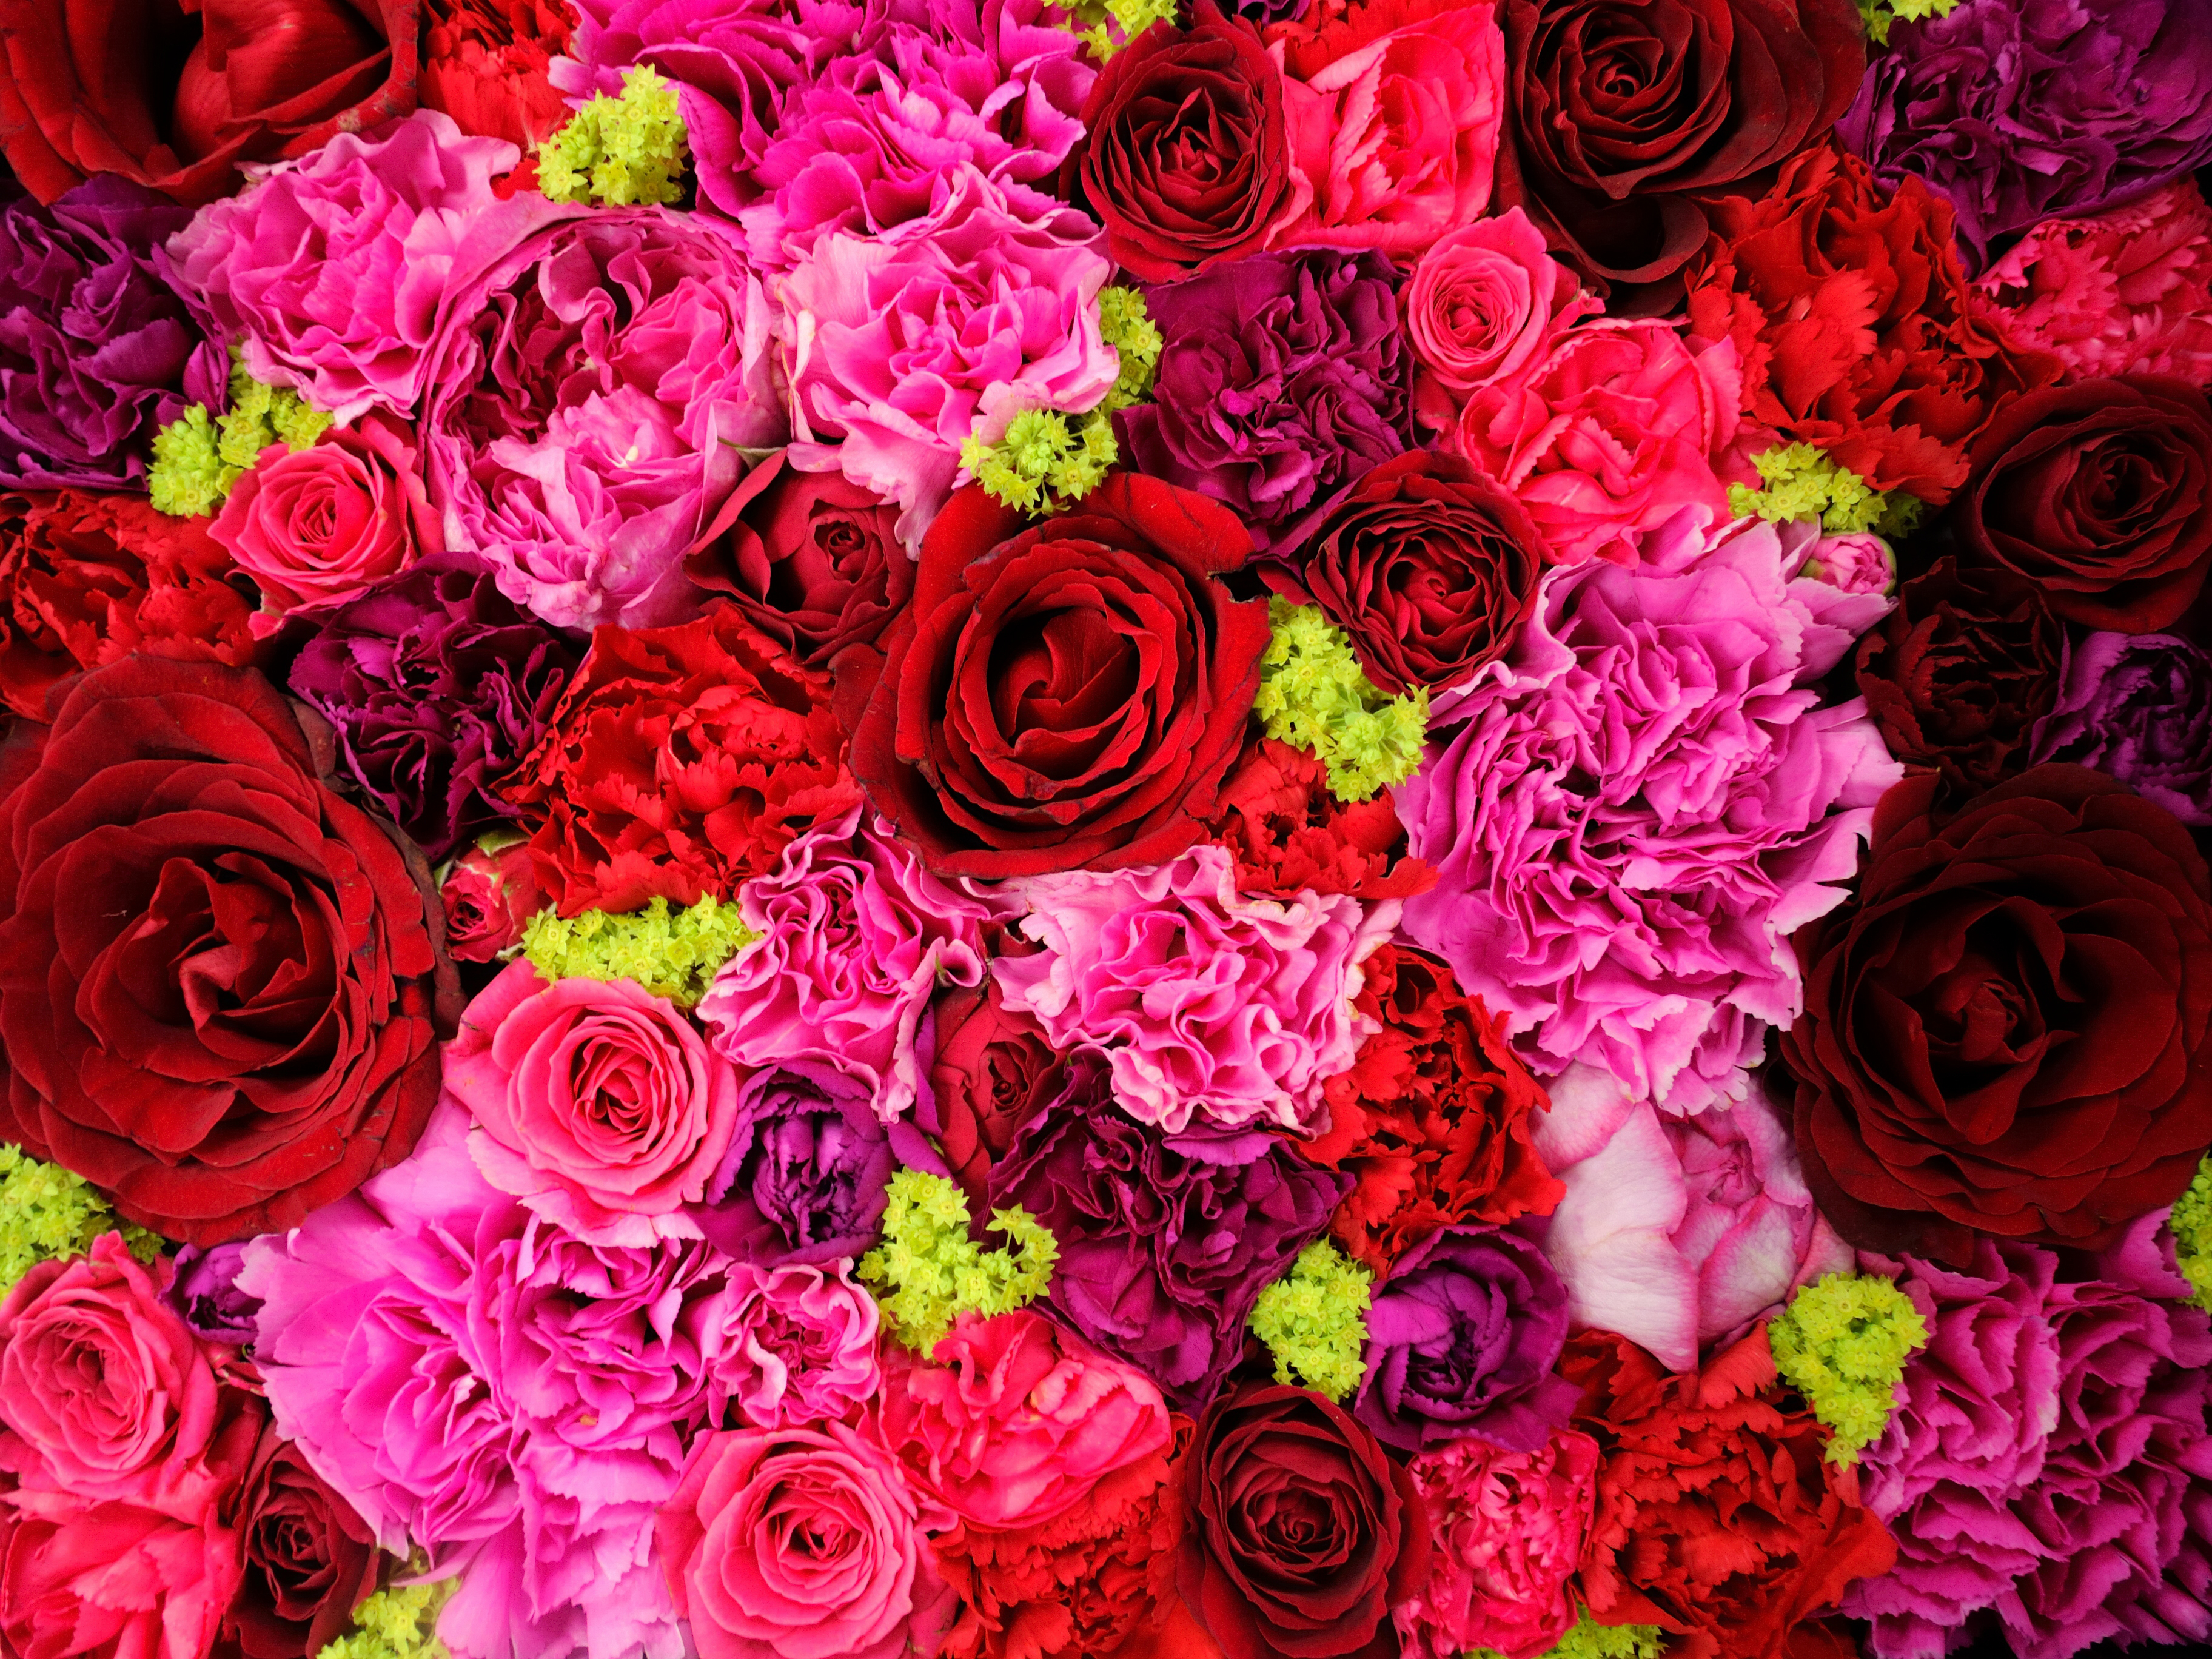 earth, flower, carnation, pink flower, red flower, rose, flowers images